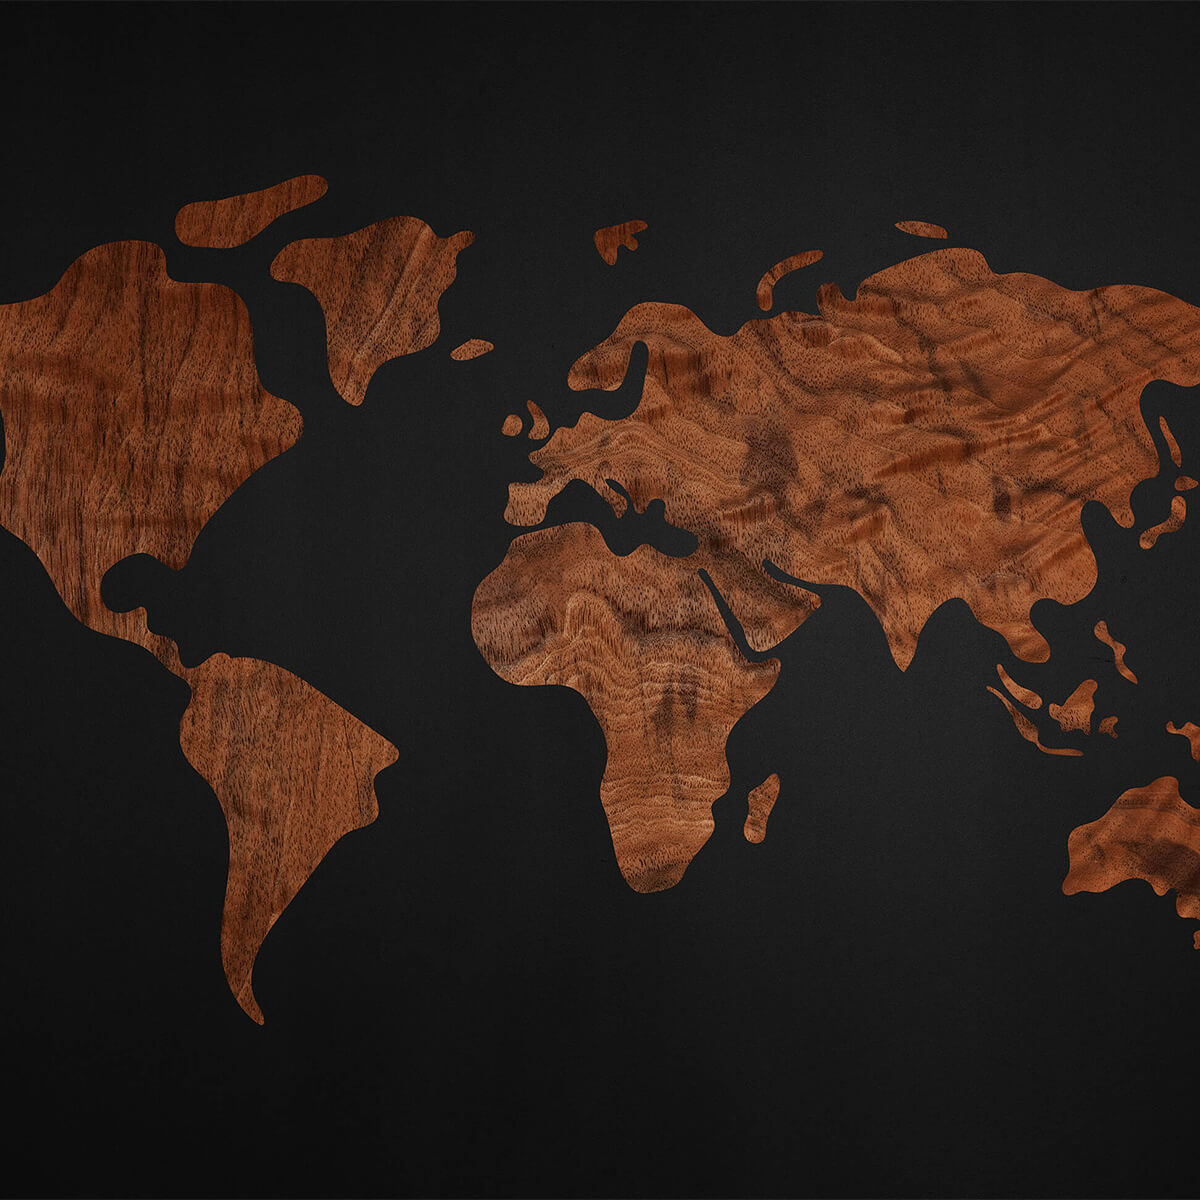 World map with wood veneer